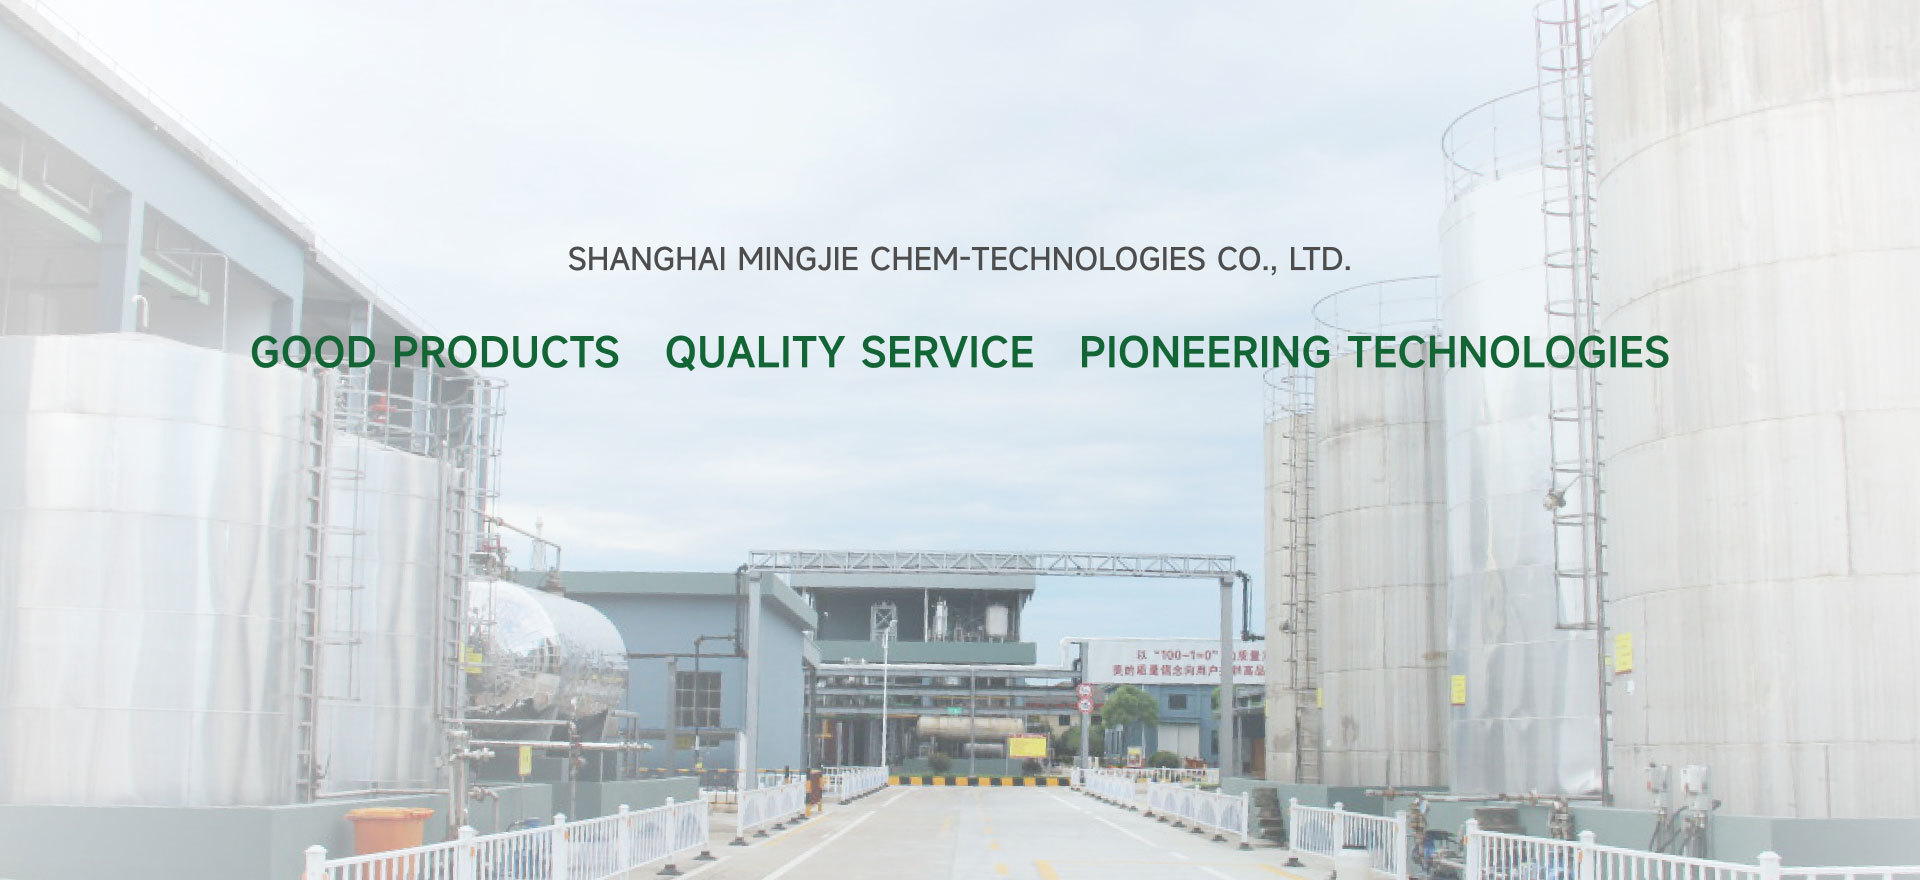 Shanghai Mingjie Chem-Technologies Co., Ltd.